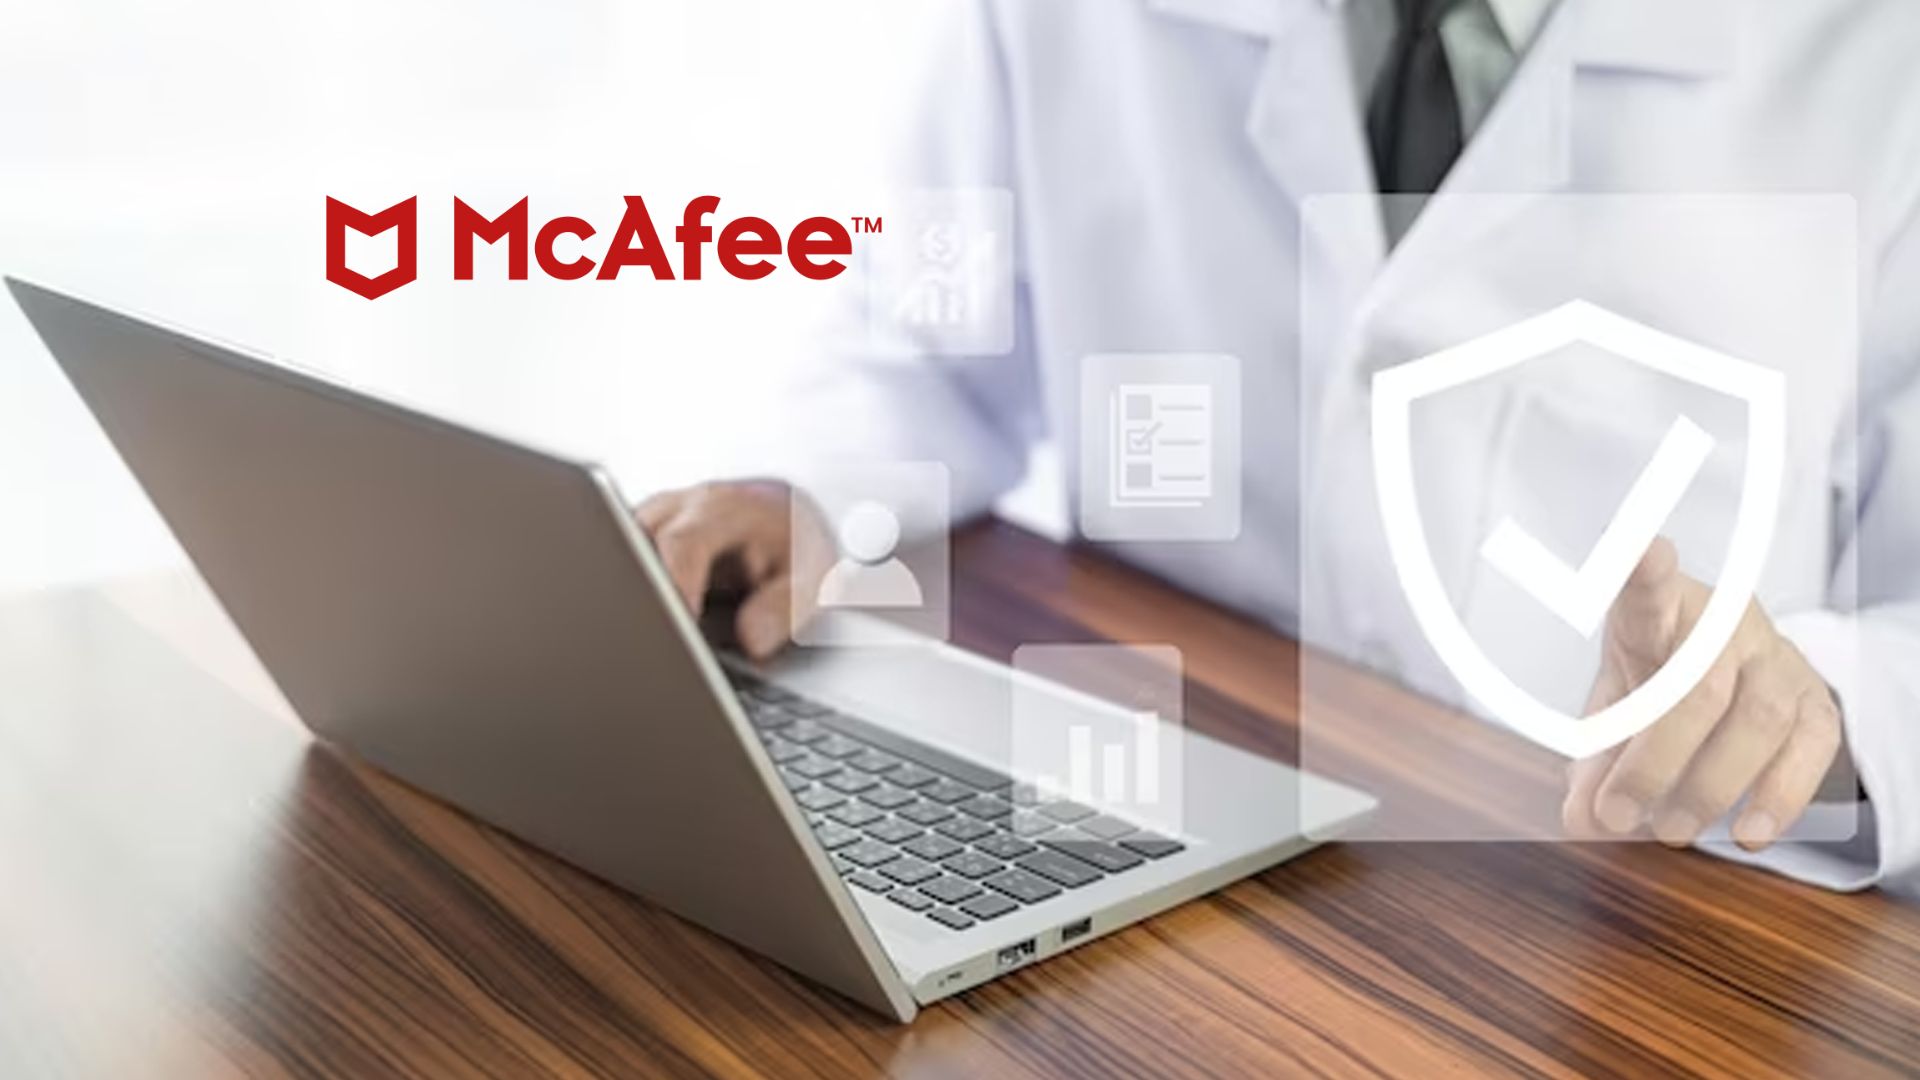 McAfee Antivirus for Business